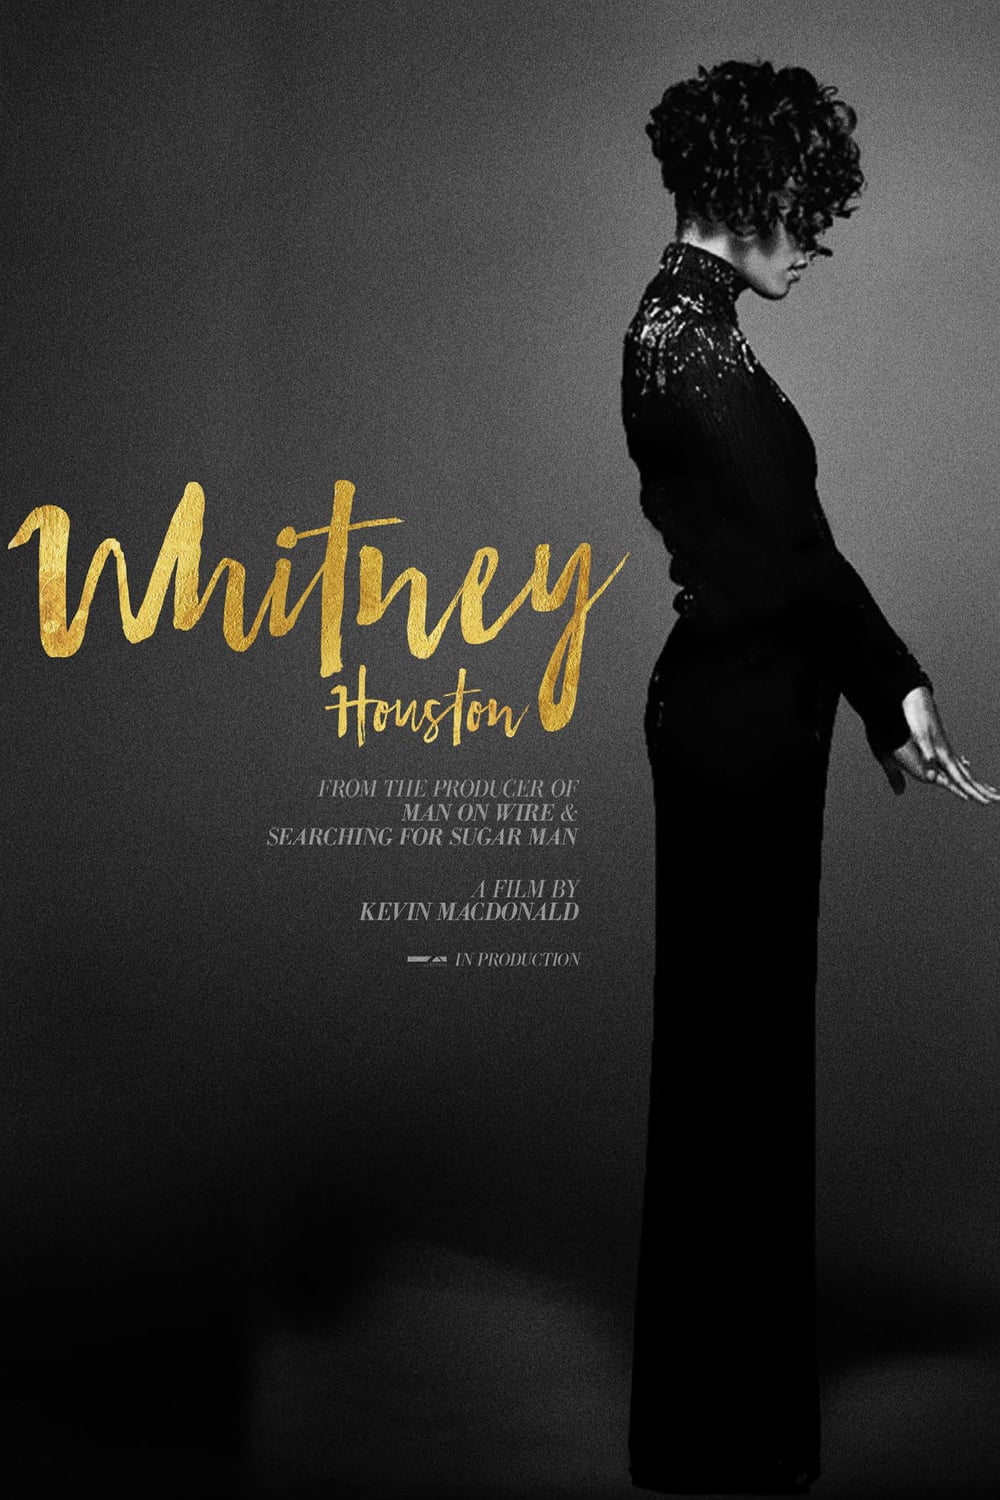 2018 Whitney